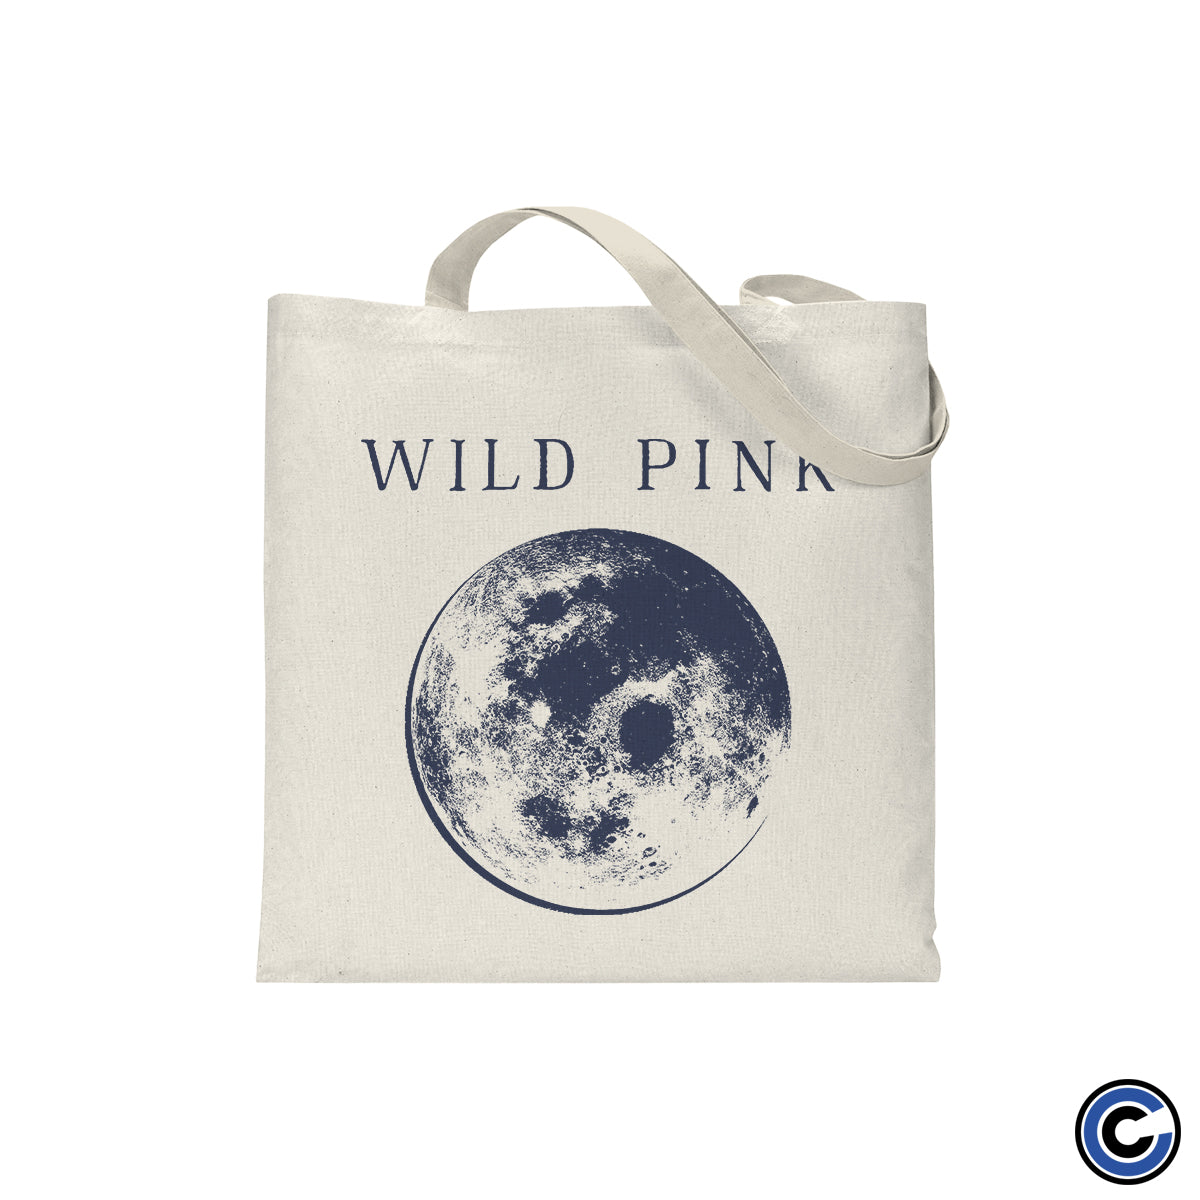 Wild Pink "Moon" Tote Bag